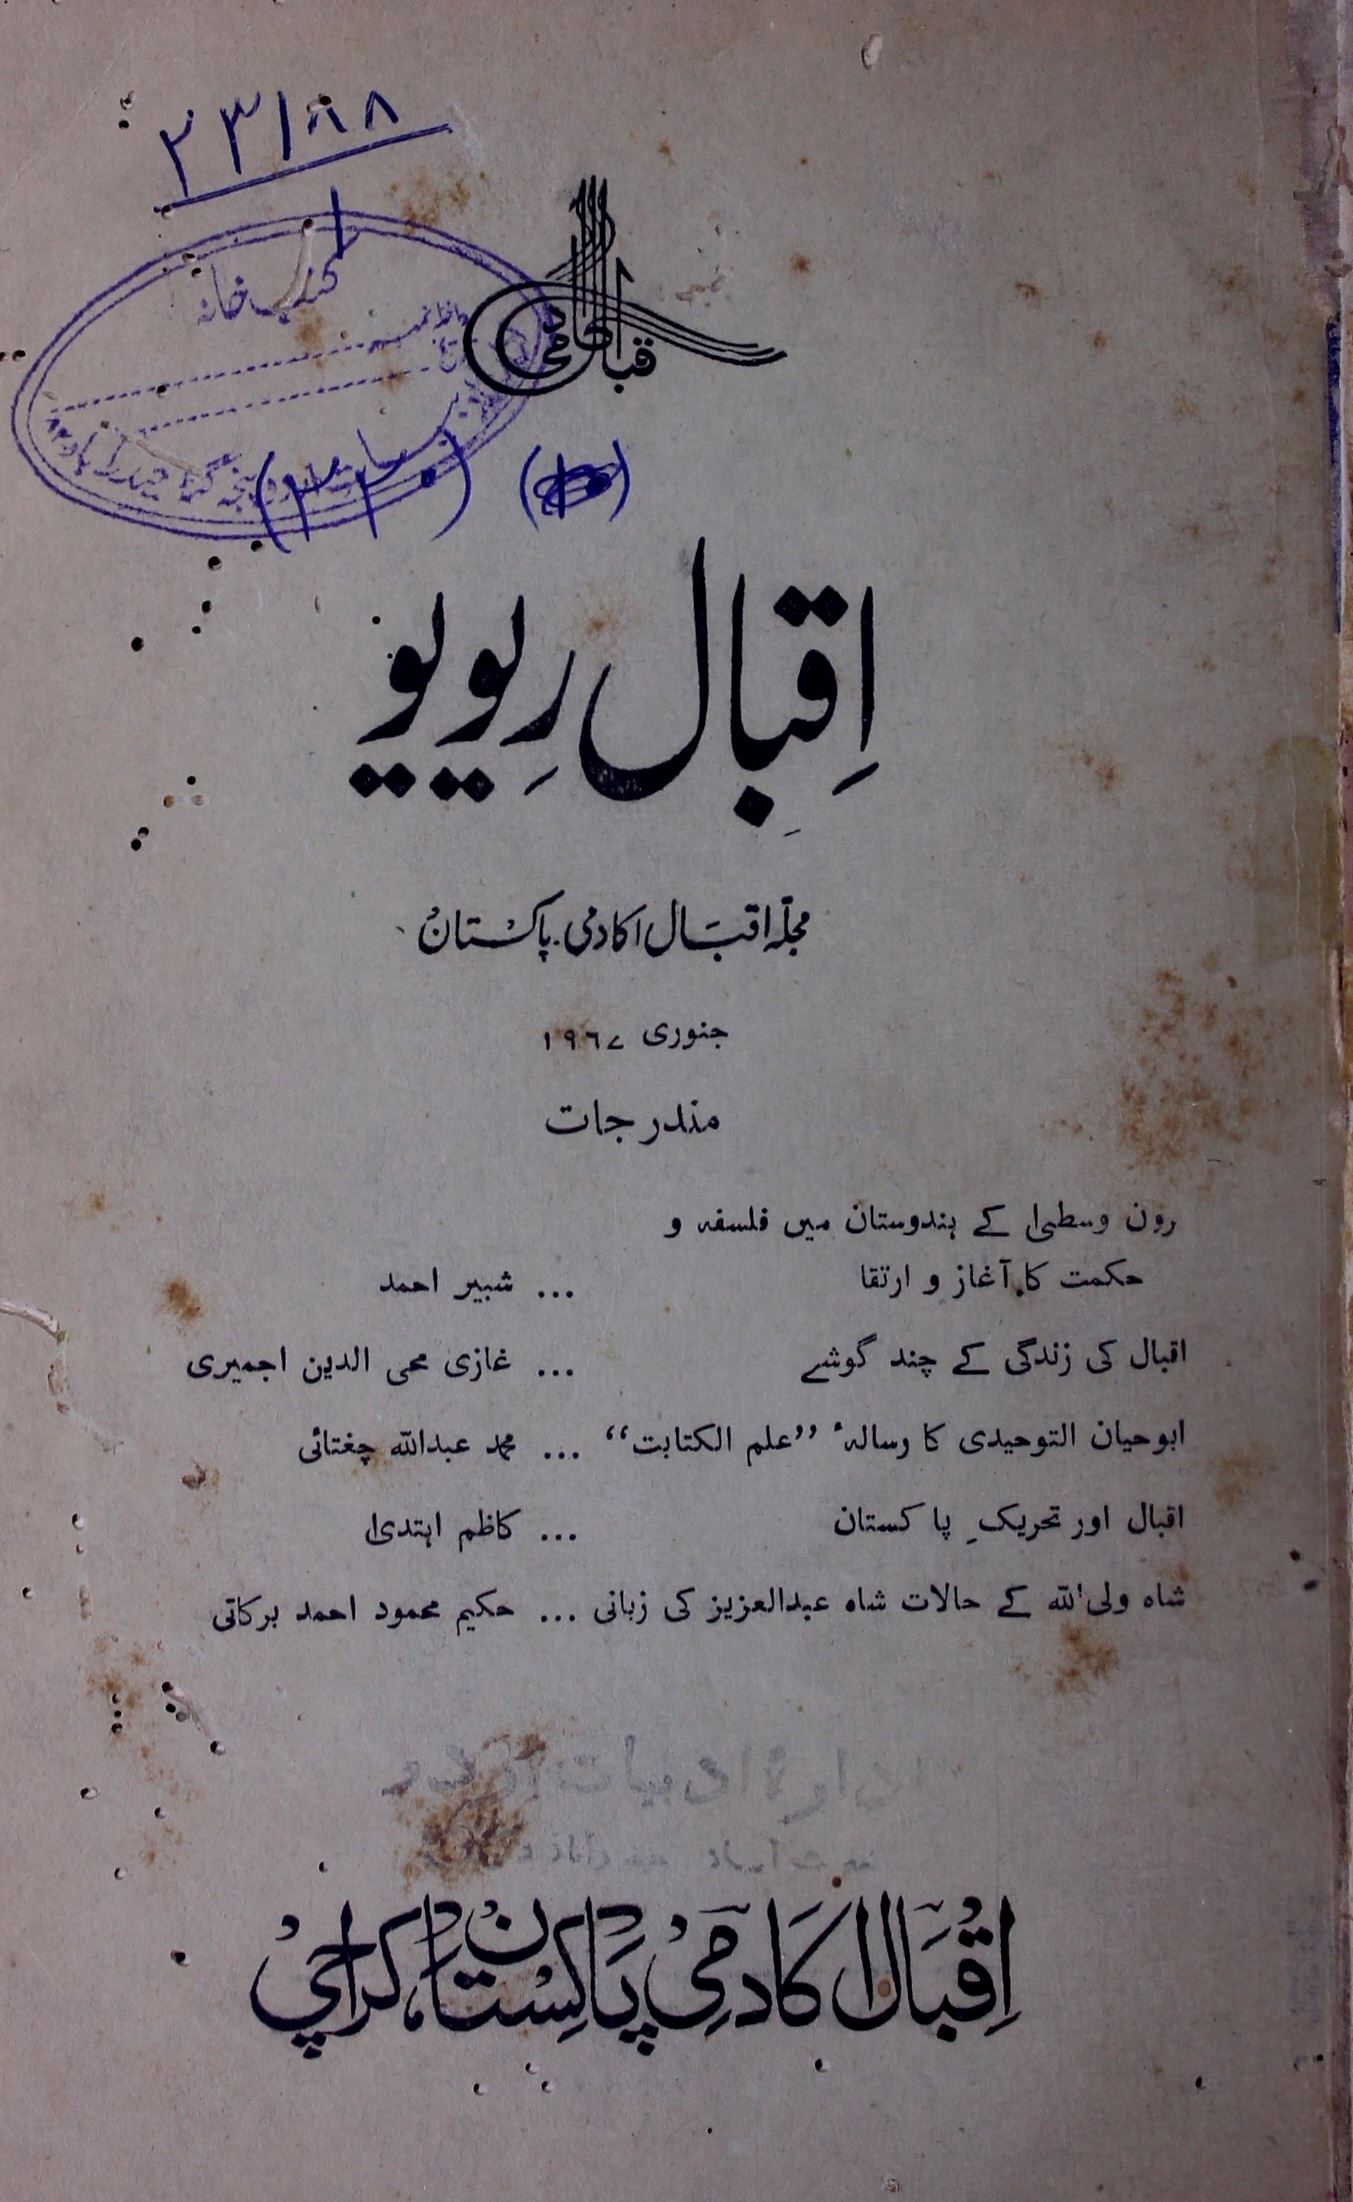 Iqbal Review Jild 7 Sh. 4 jan. 1967